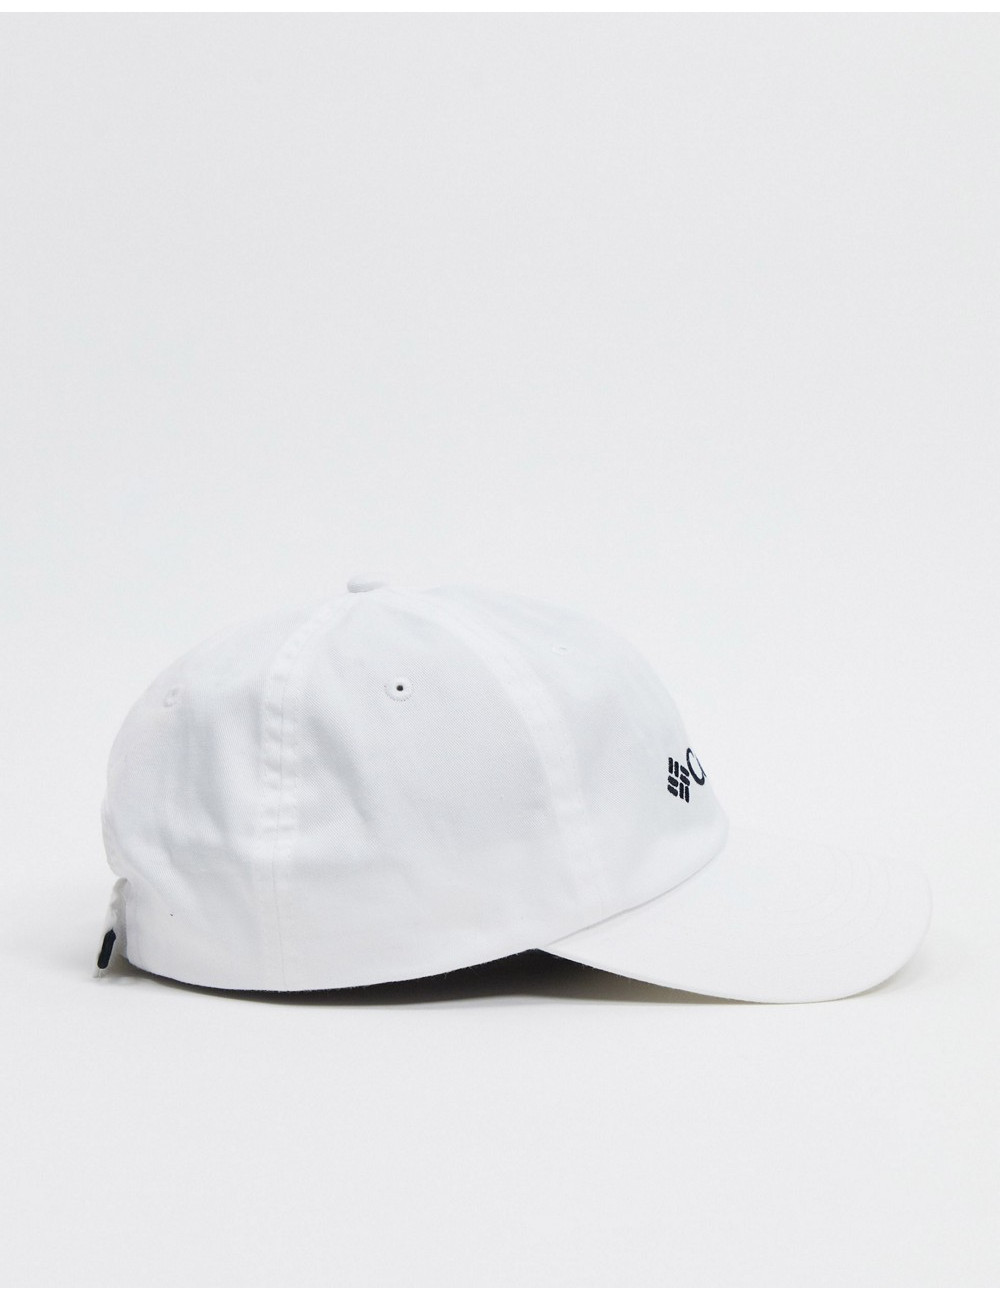 Columbia Roc II cap in white